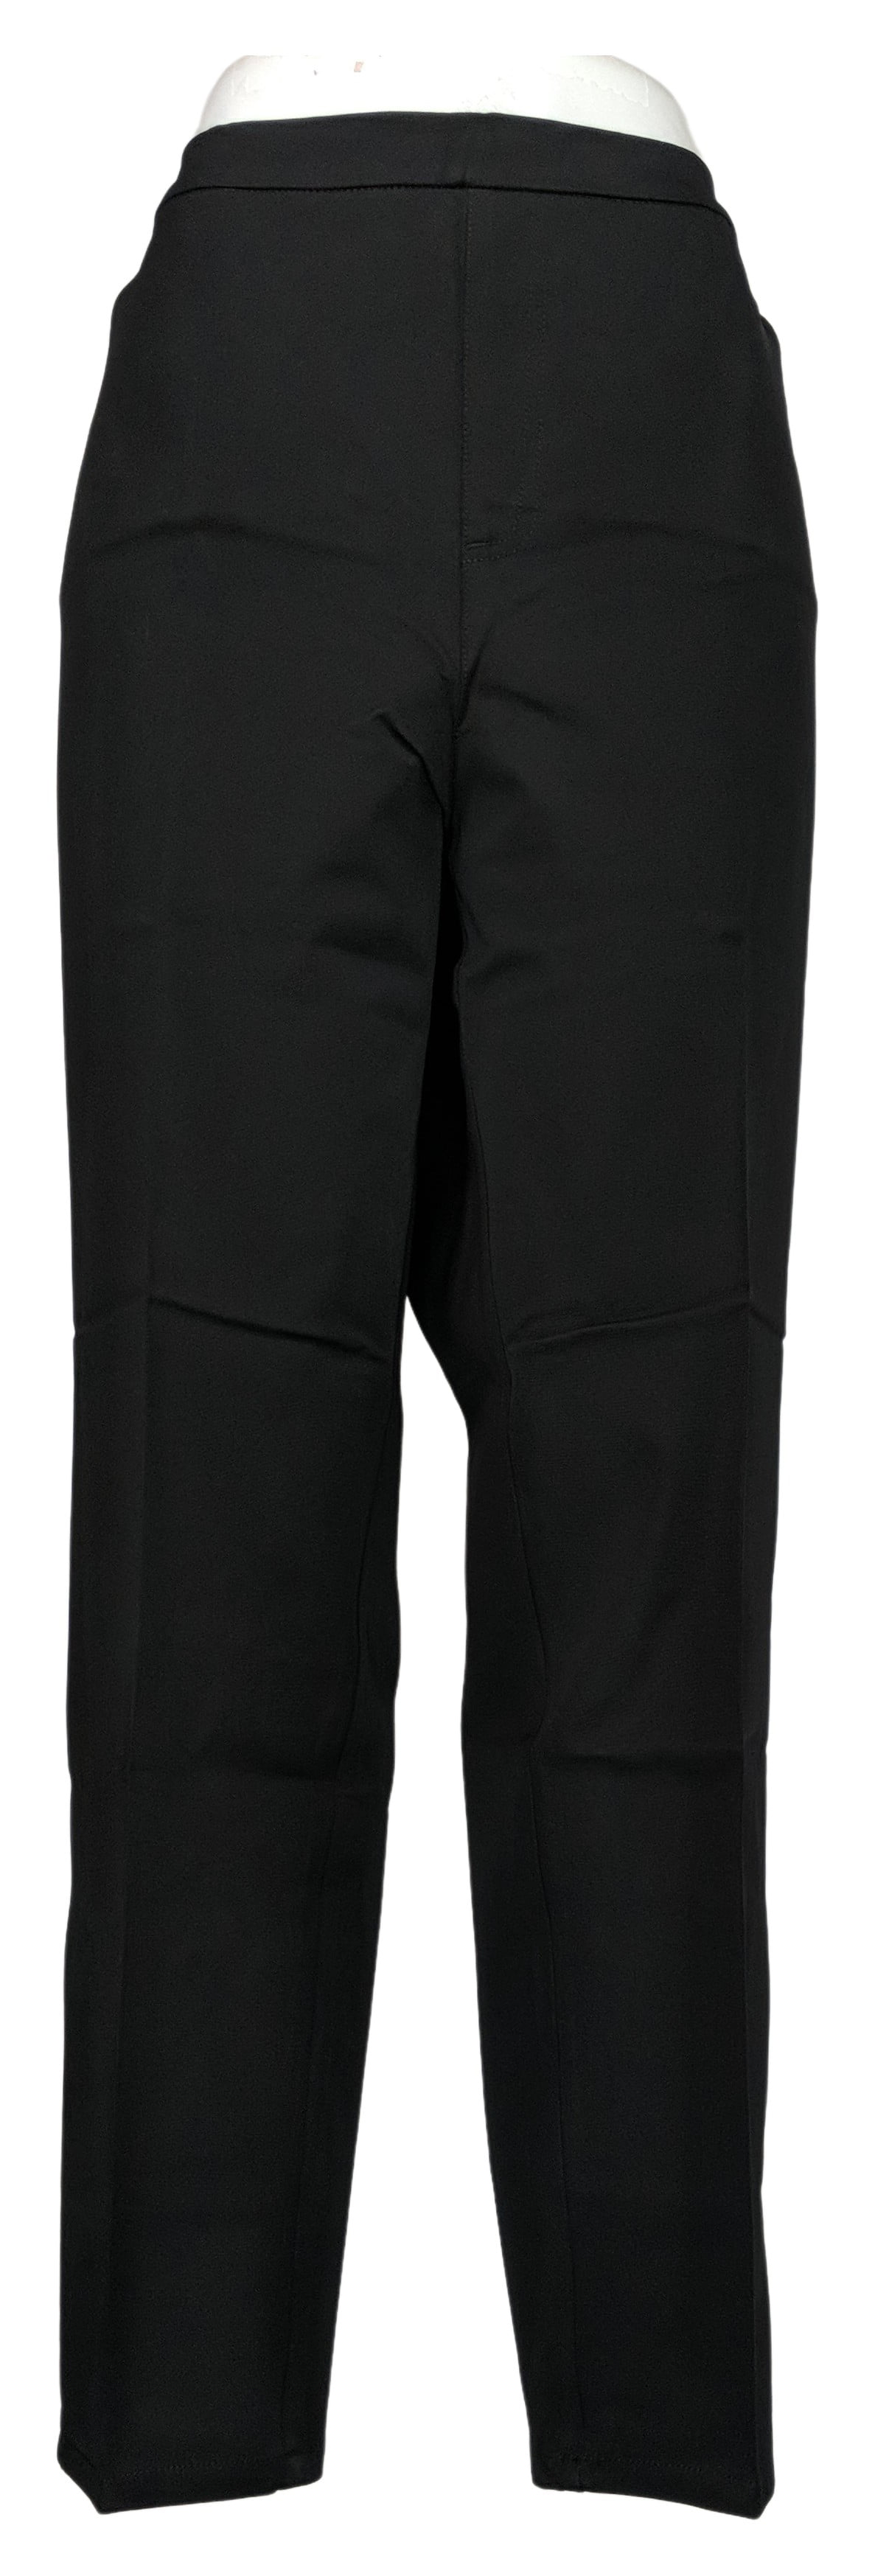 Isaac Mizrahi 24/7 Stretch Slim Leg Pants Pockets Black 22W NEW A309566 